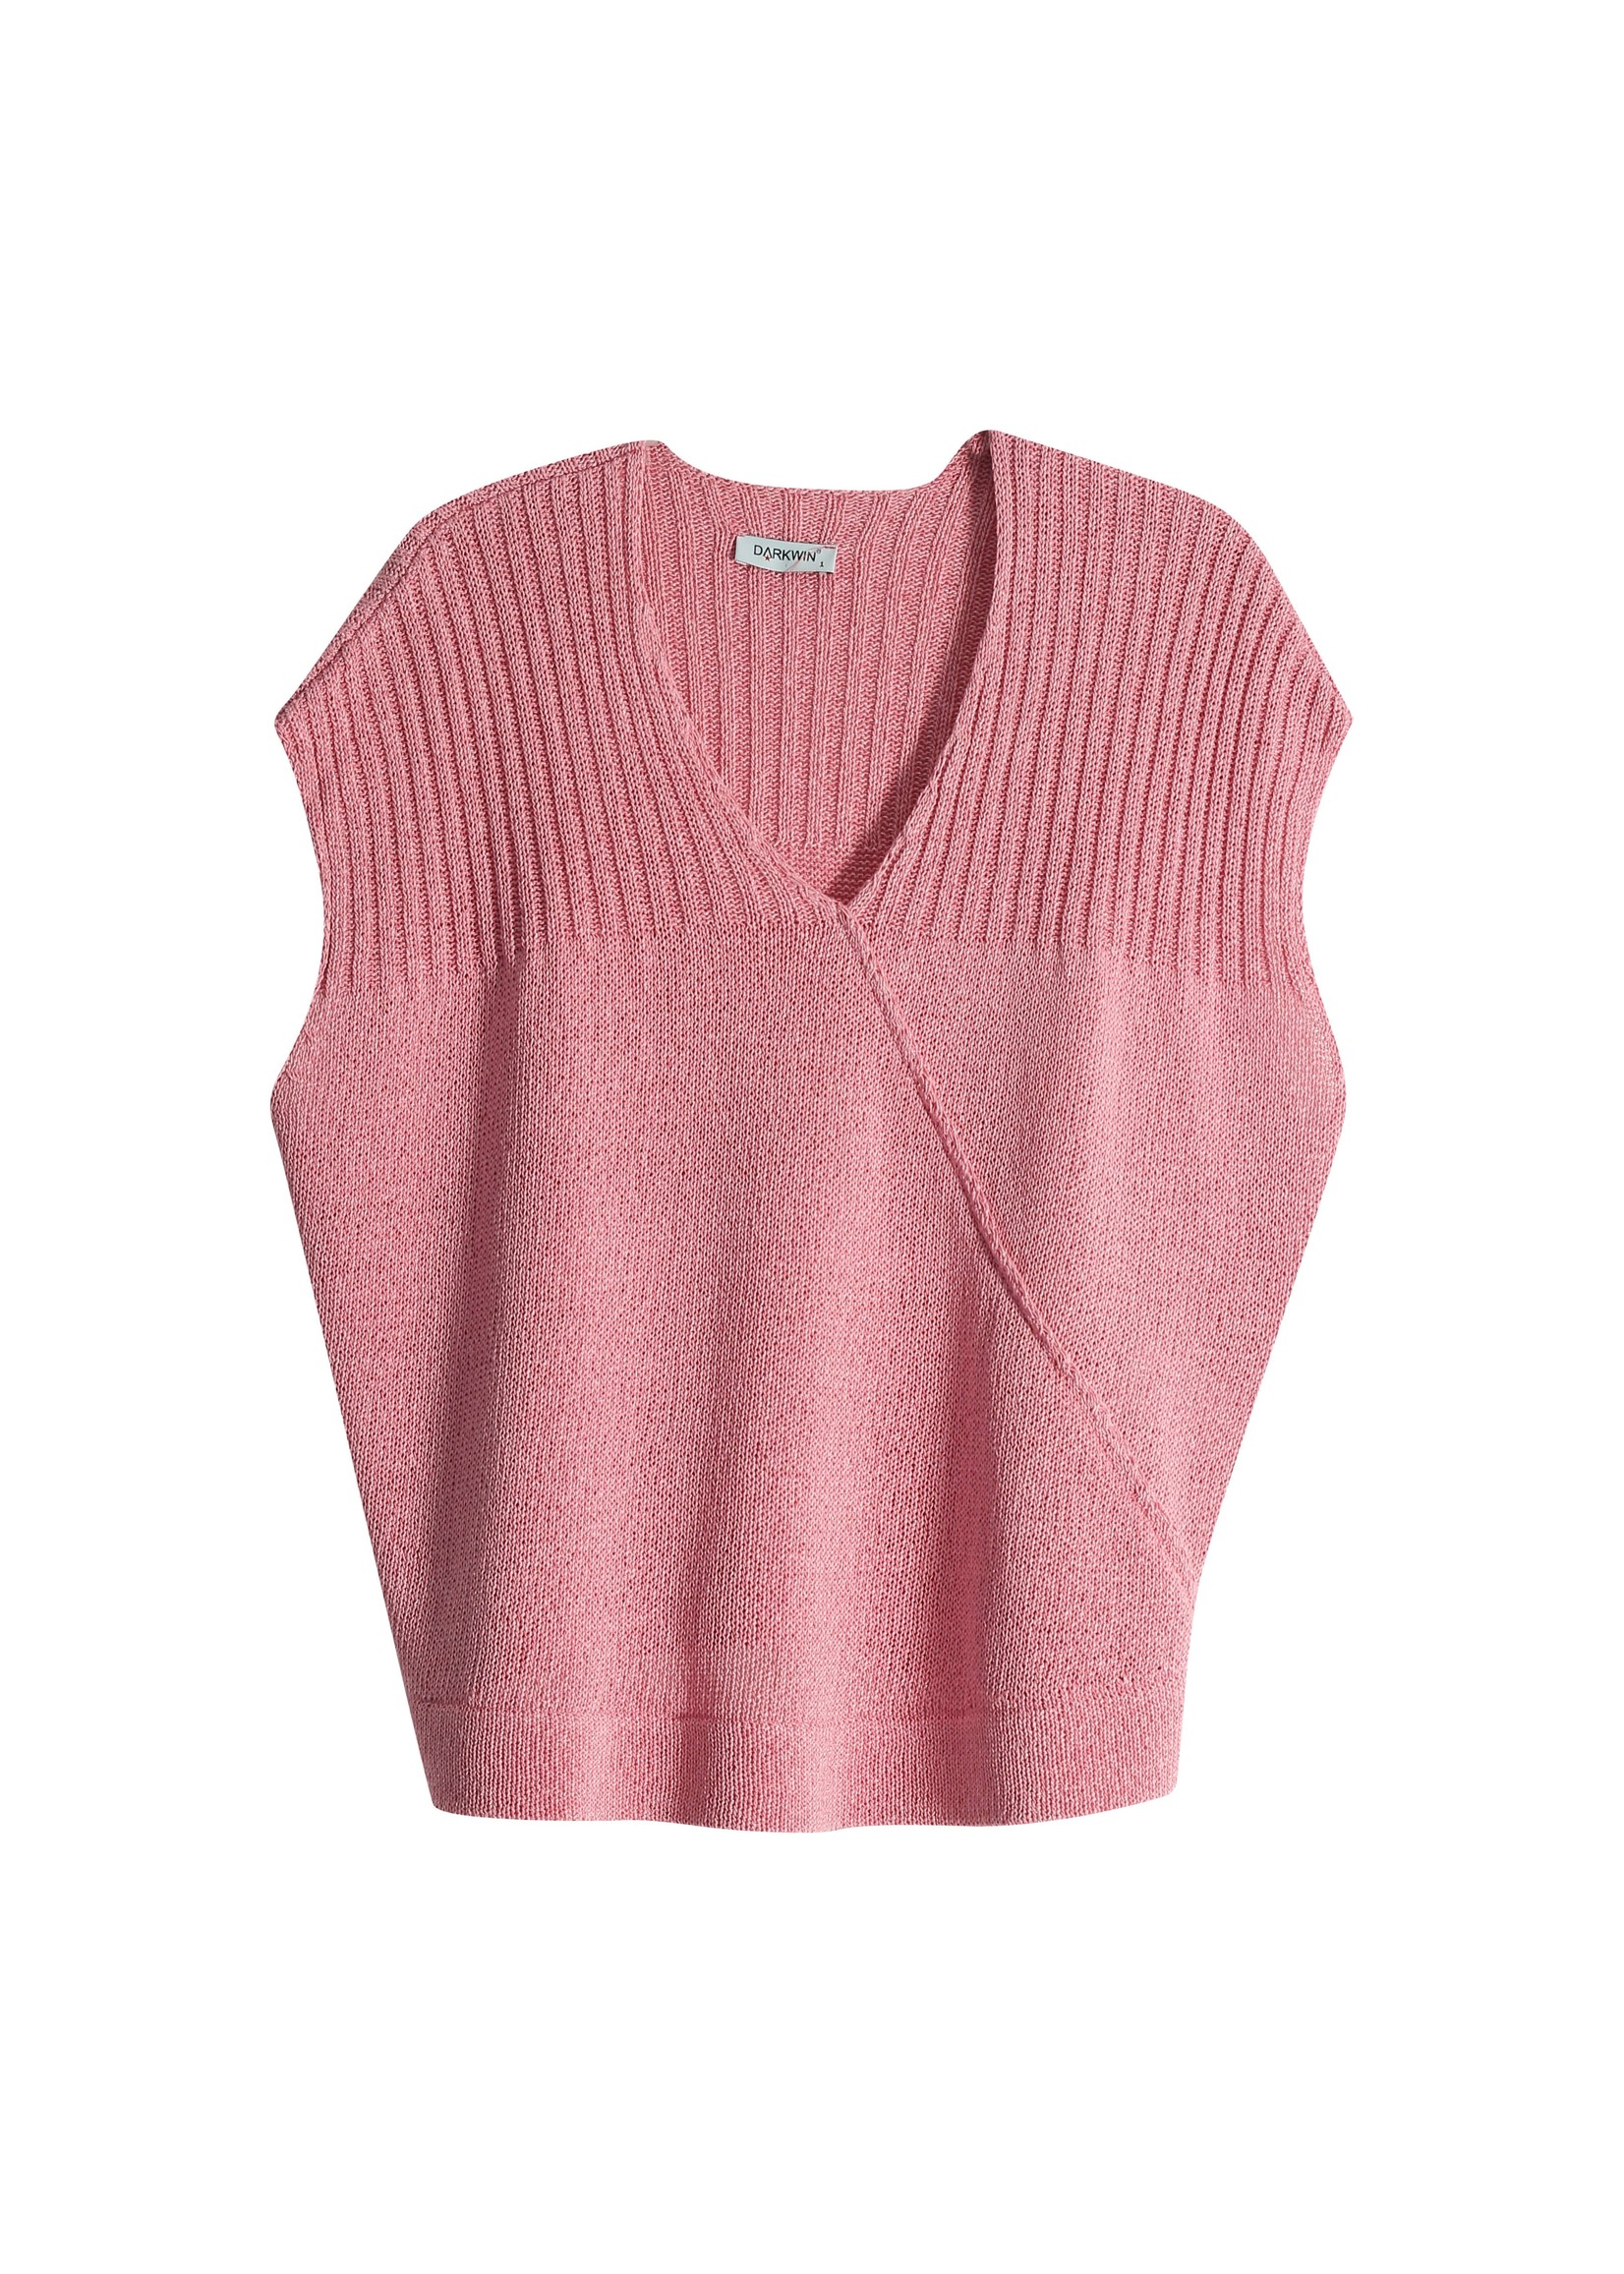 SYBIL b5617 pink knit top